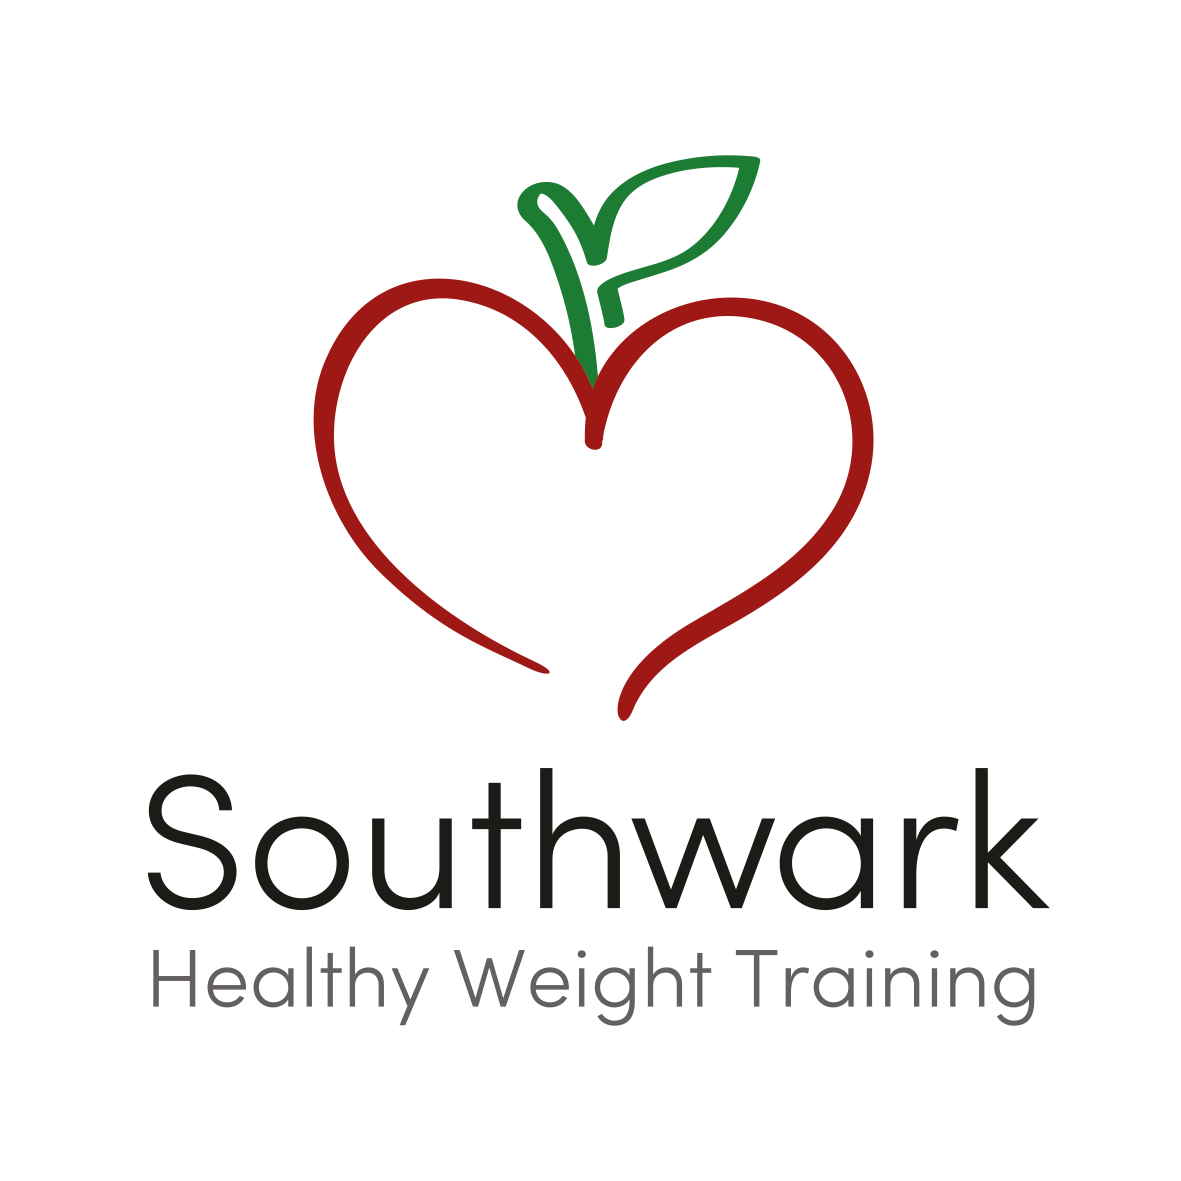 Southwark Healthy Weight Training logo